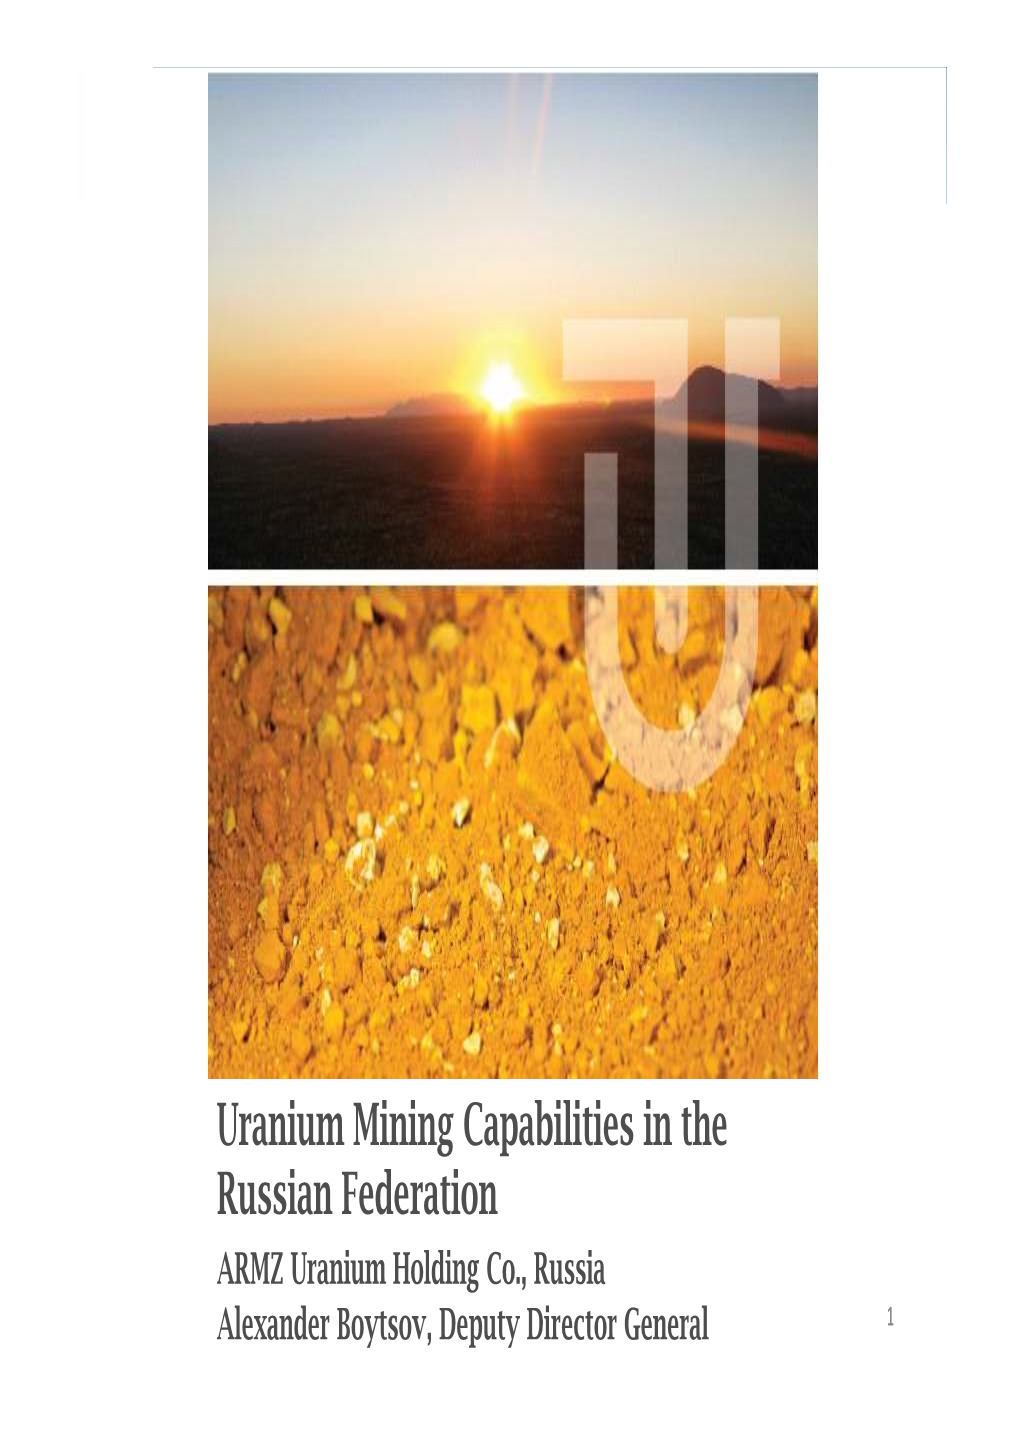 Uranium Mining Capabilities in the Russian Federation ARMZ Uranium Holding Co., Russia 11 Alexander Boytsov, Deputy Director General ARMZ in Russian Nuclear Industry